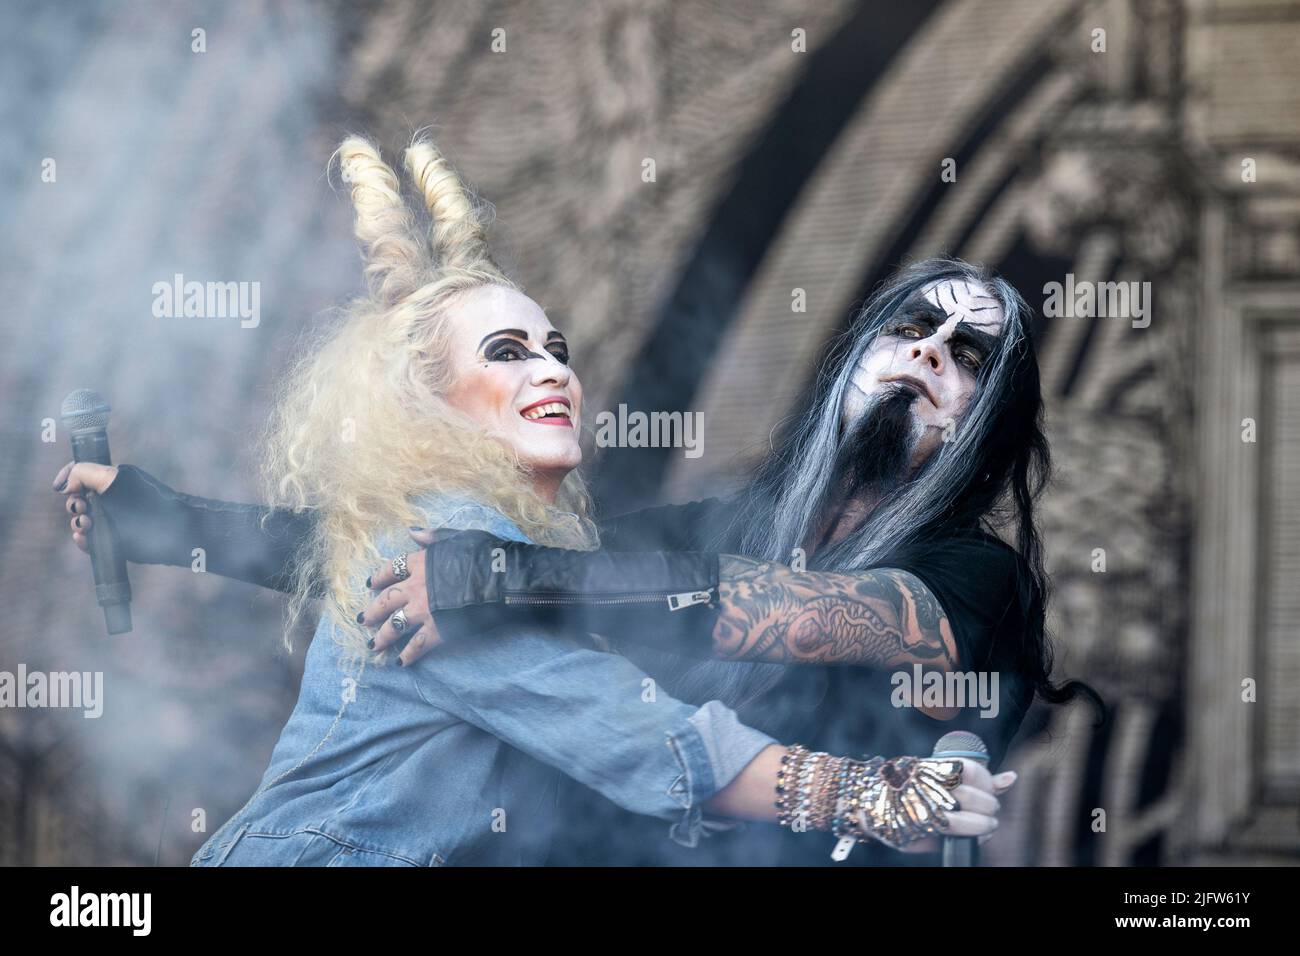 Happy Birthday to Shagrath of Dimmu Borgir. Photo by @metalvisuals. ©️  MetalVisuals.com.